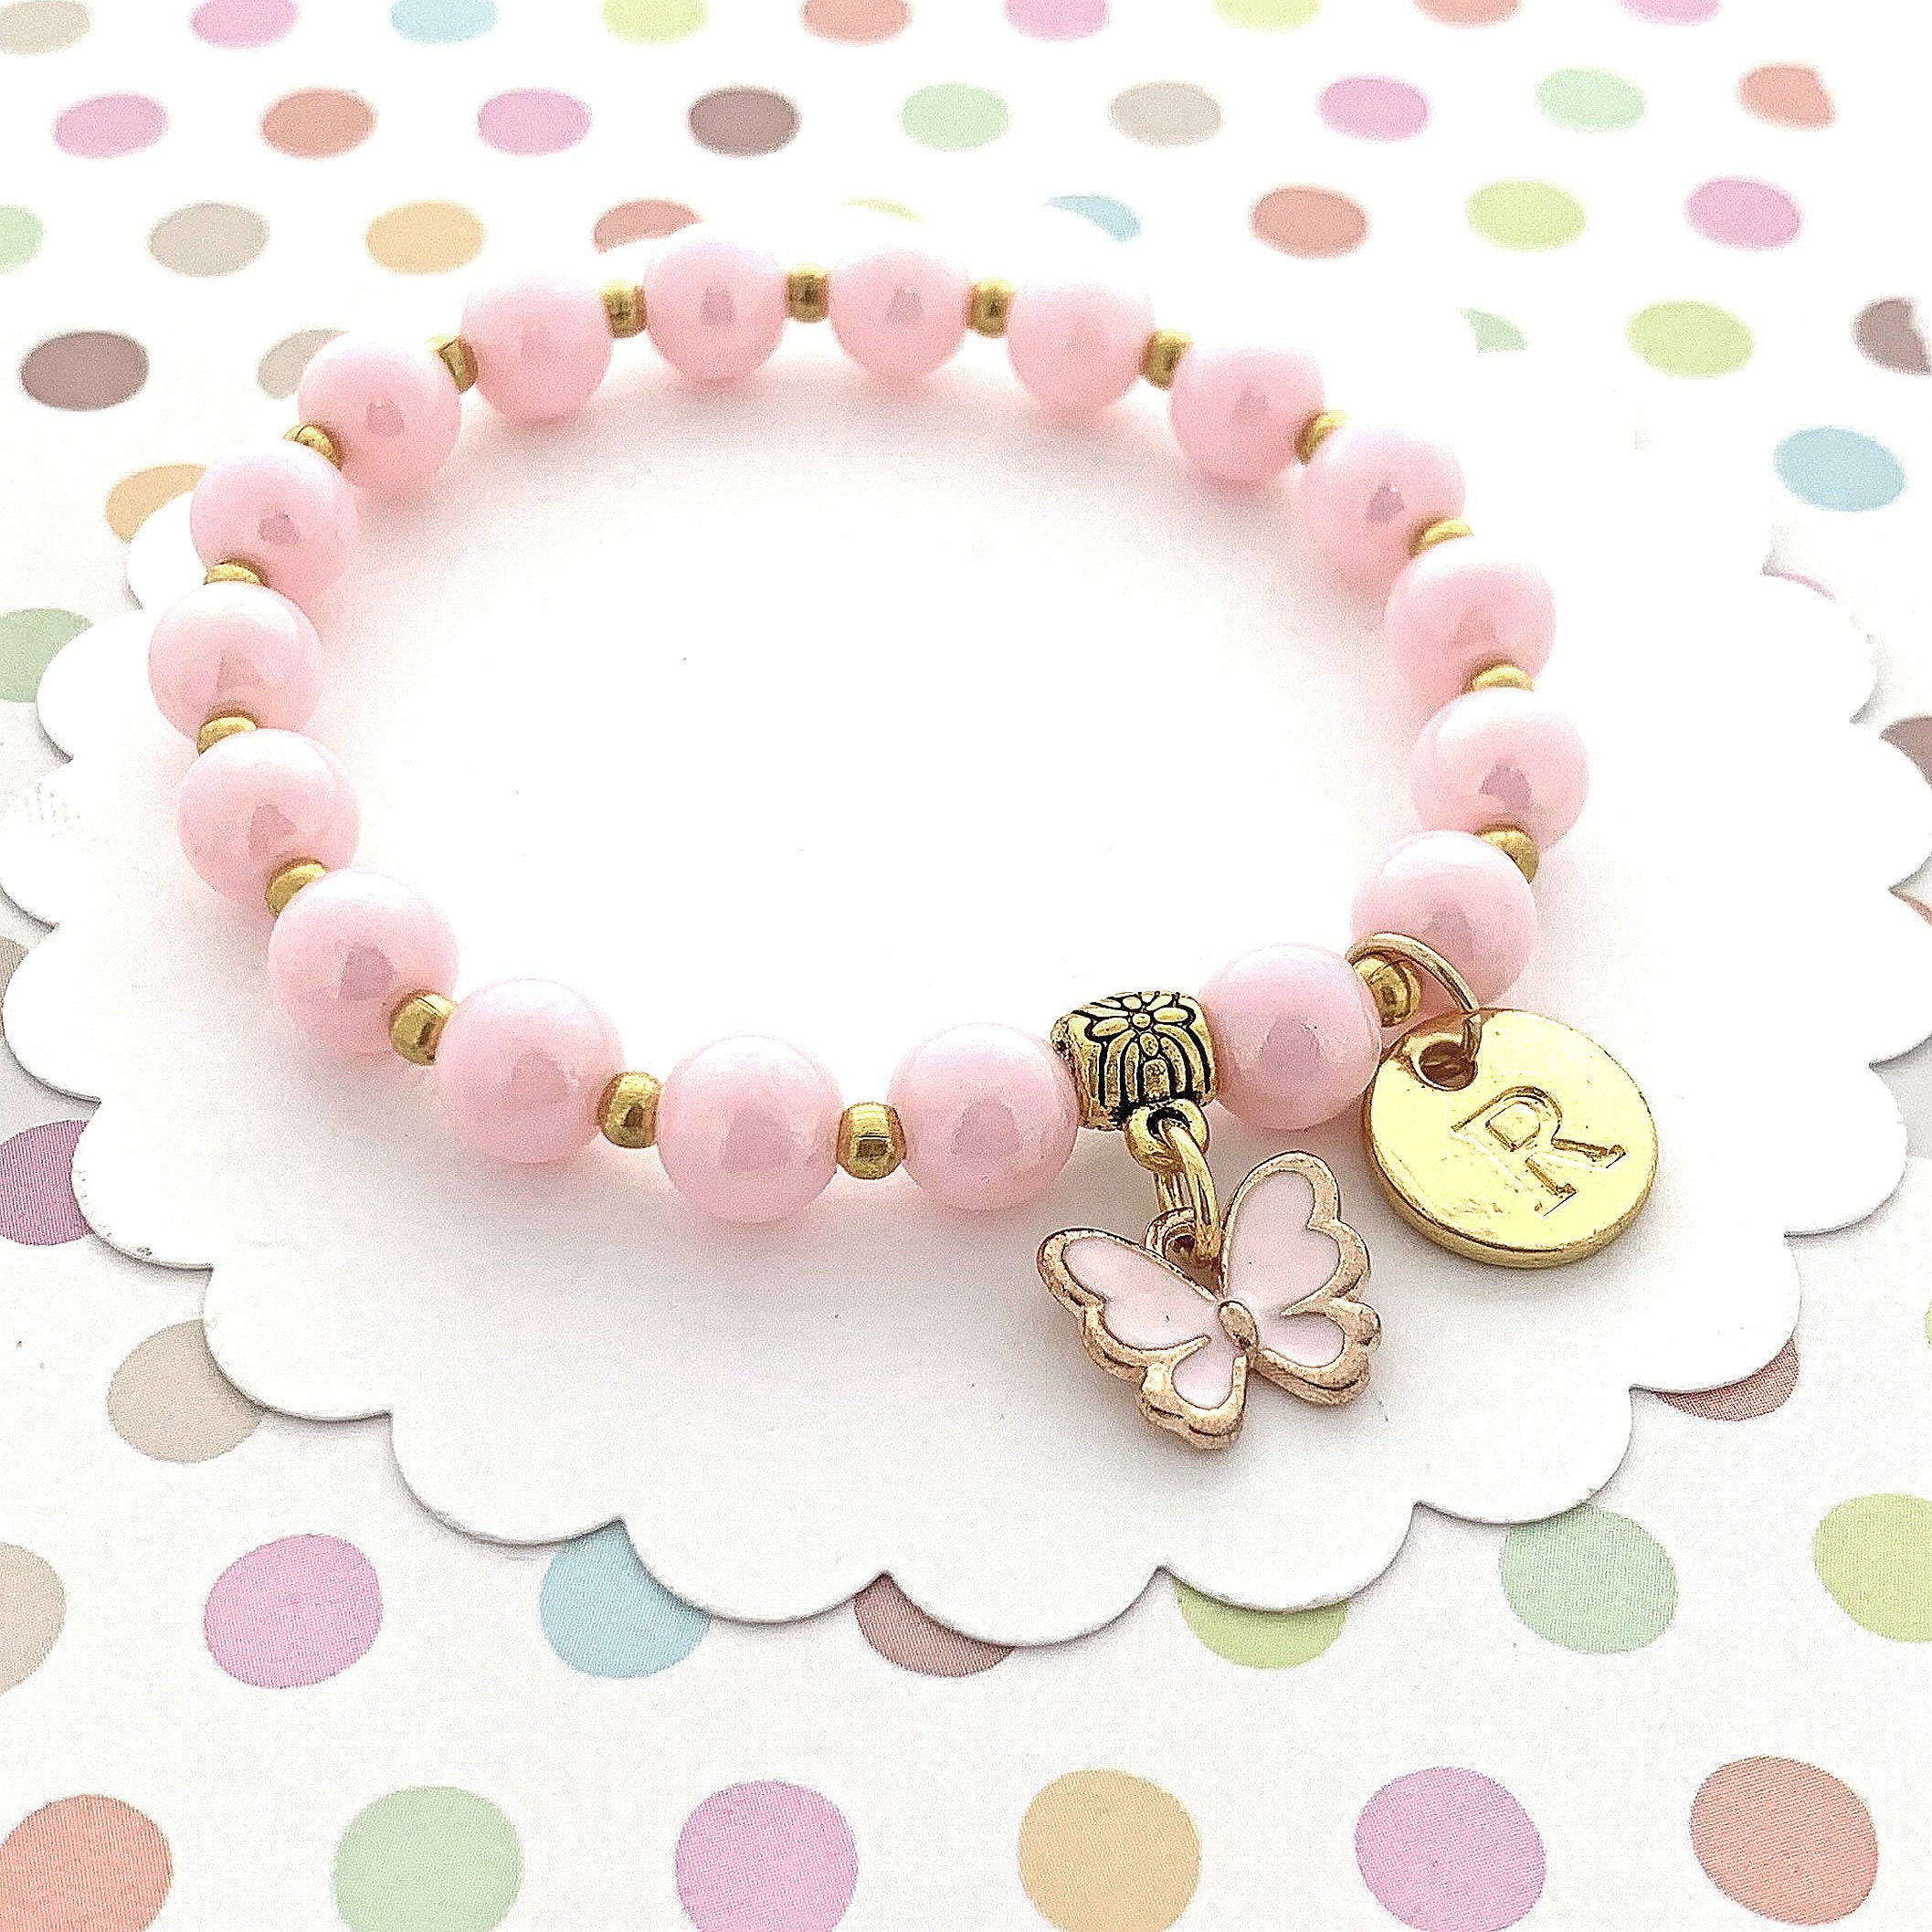 ORISPRE Butterfly Bracelet for Girls, Gifts for 8 10 Year Old Girl Birthday Christmas